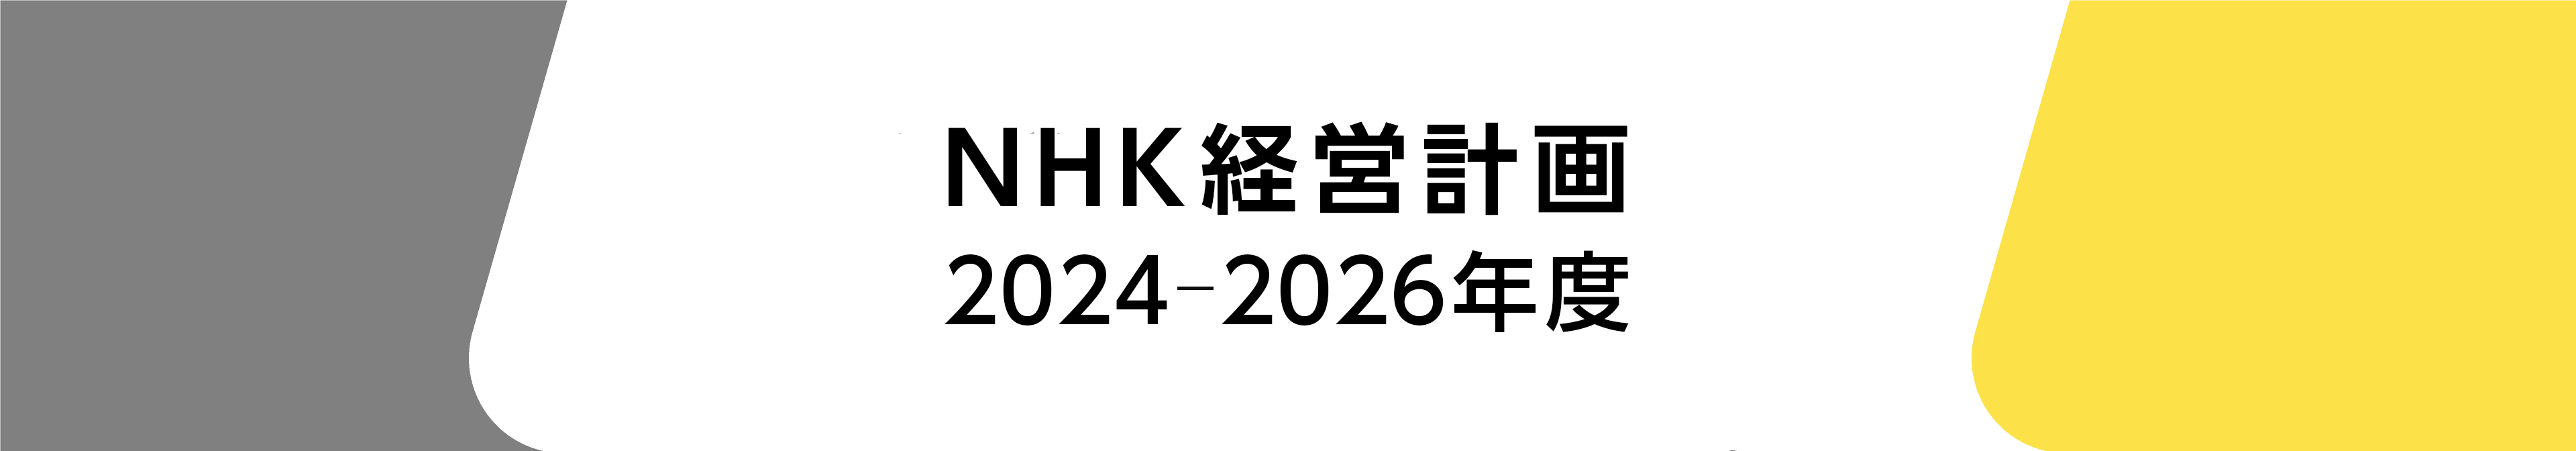 NHK経営計画 2024-2026年度